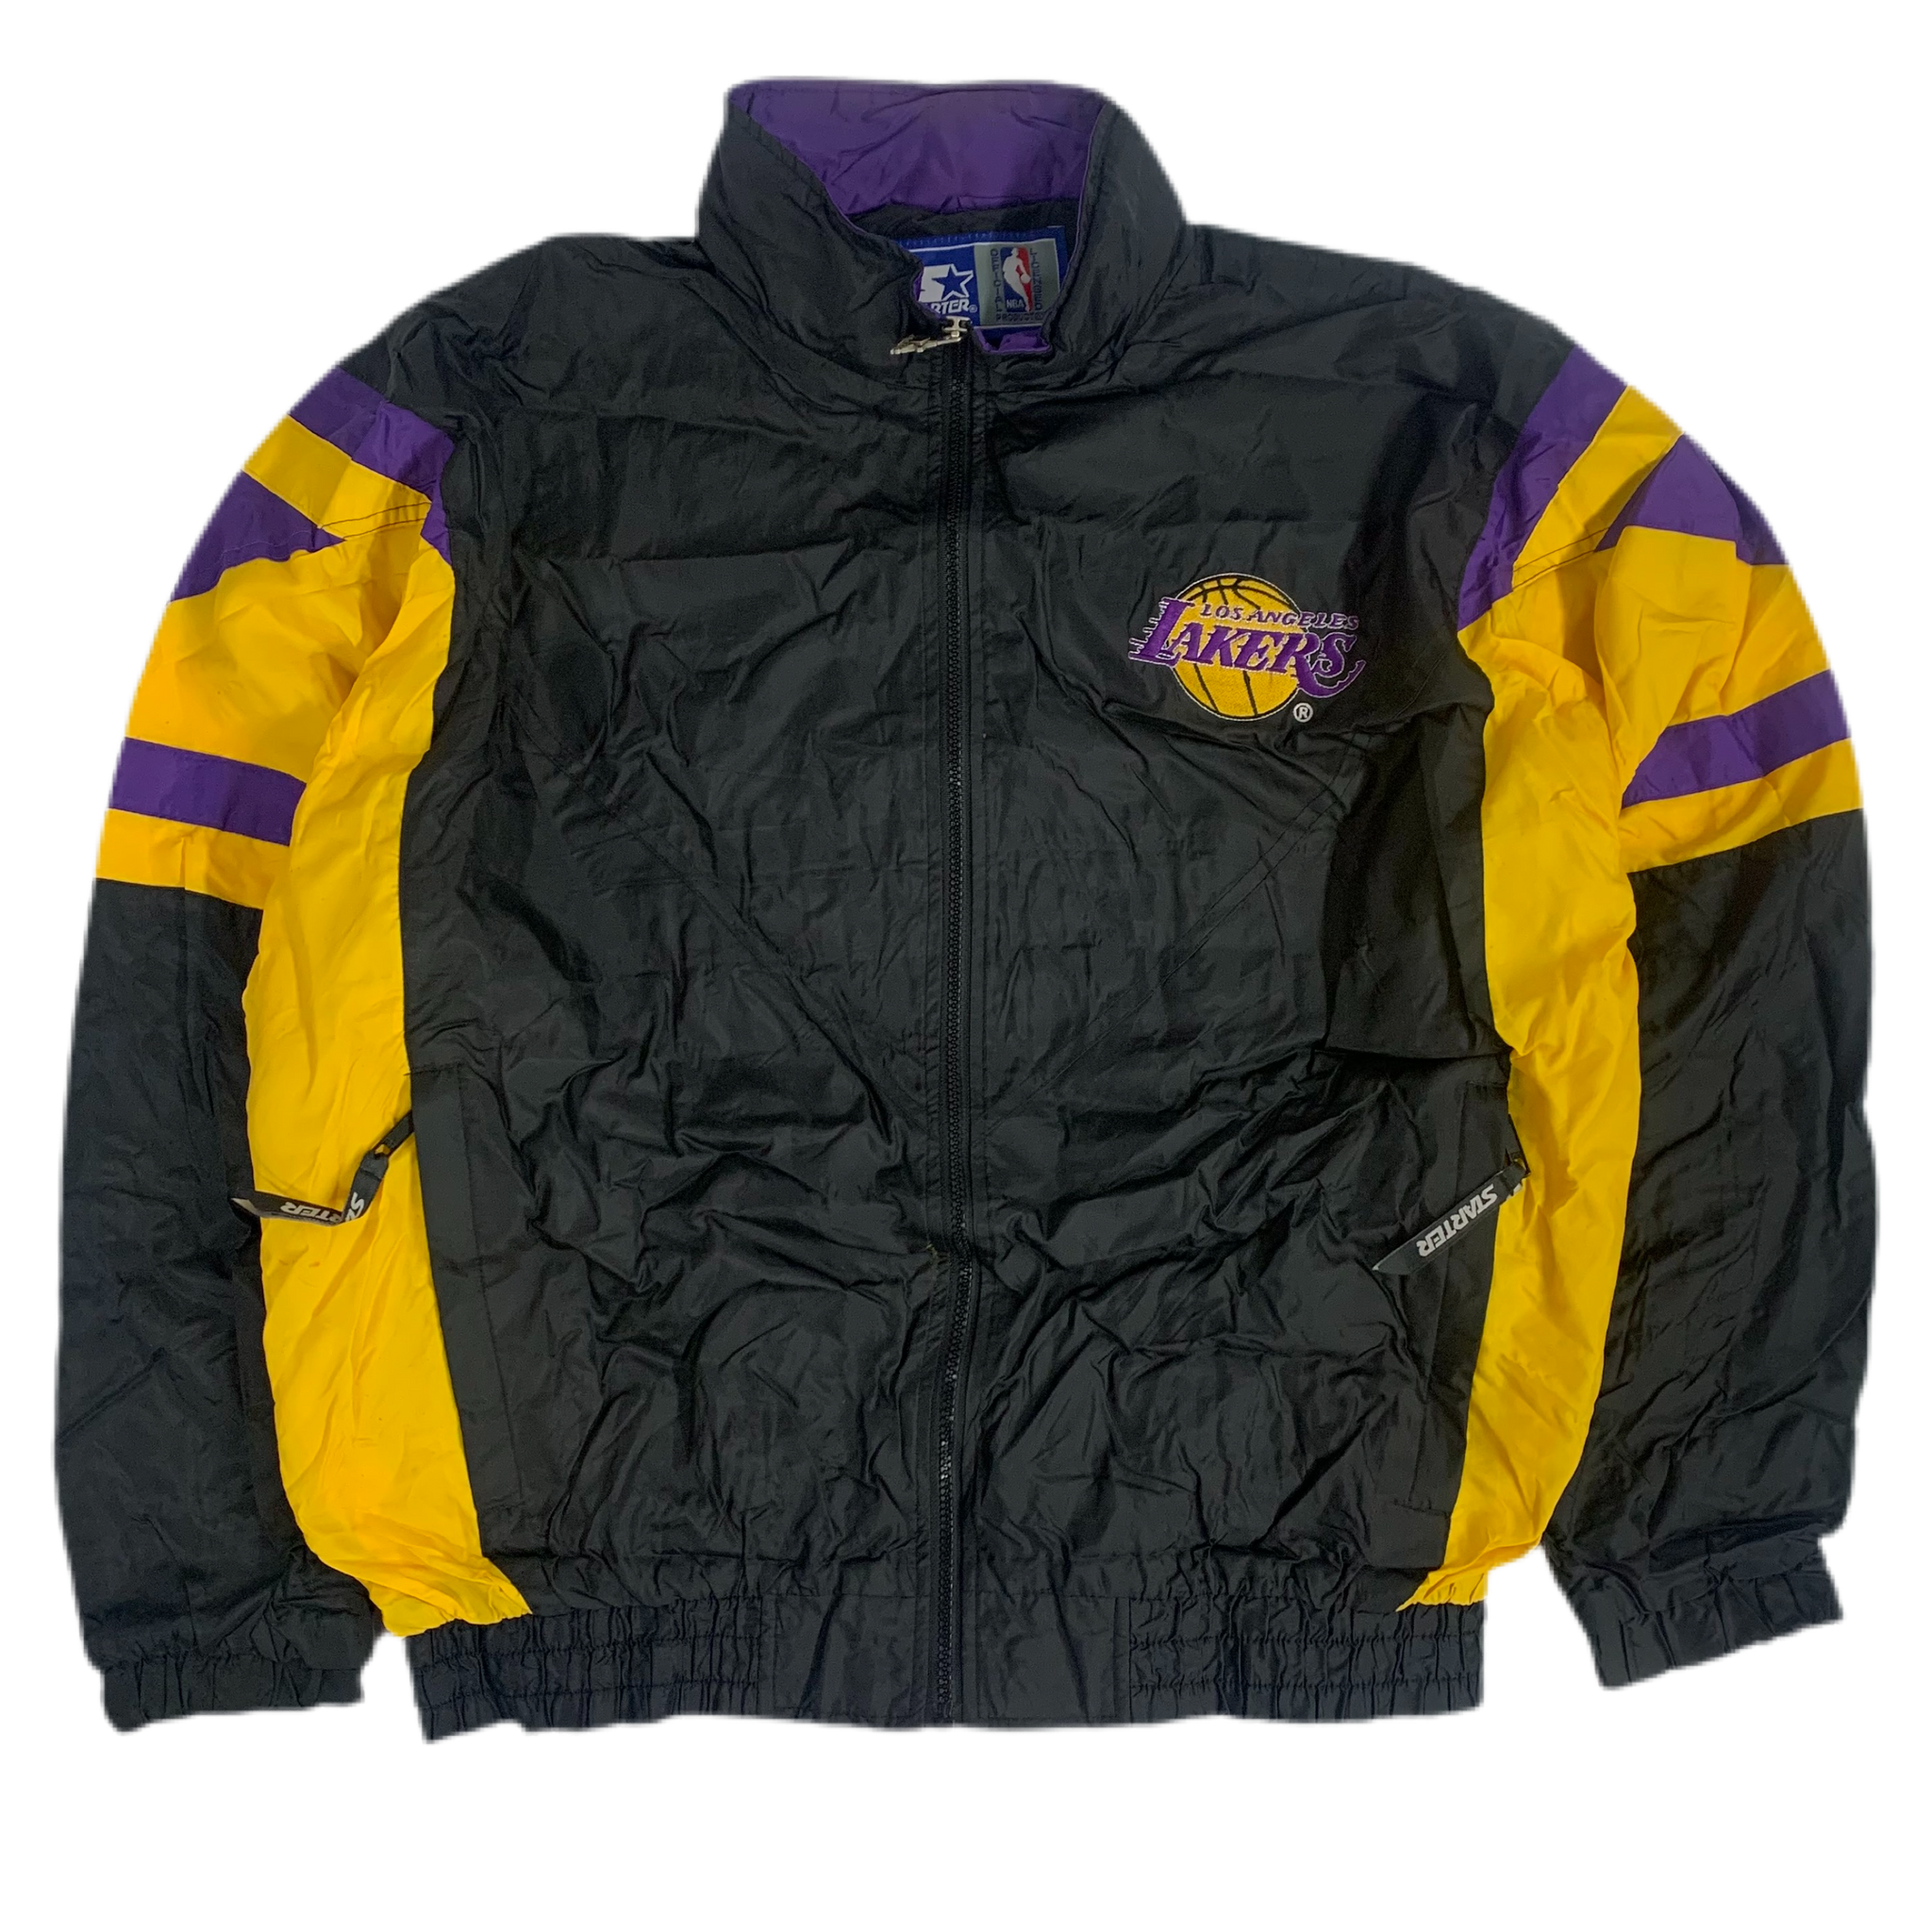 Vintage 90s Los Angeles Lakers Starter Basketball Jacket Size XL